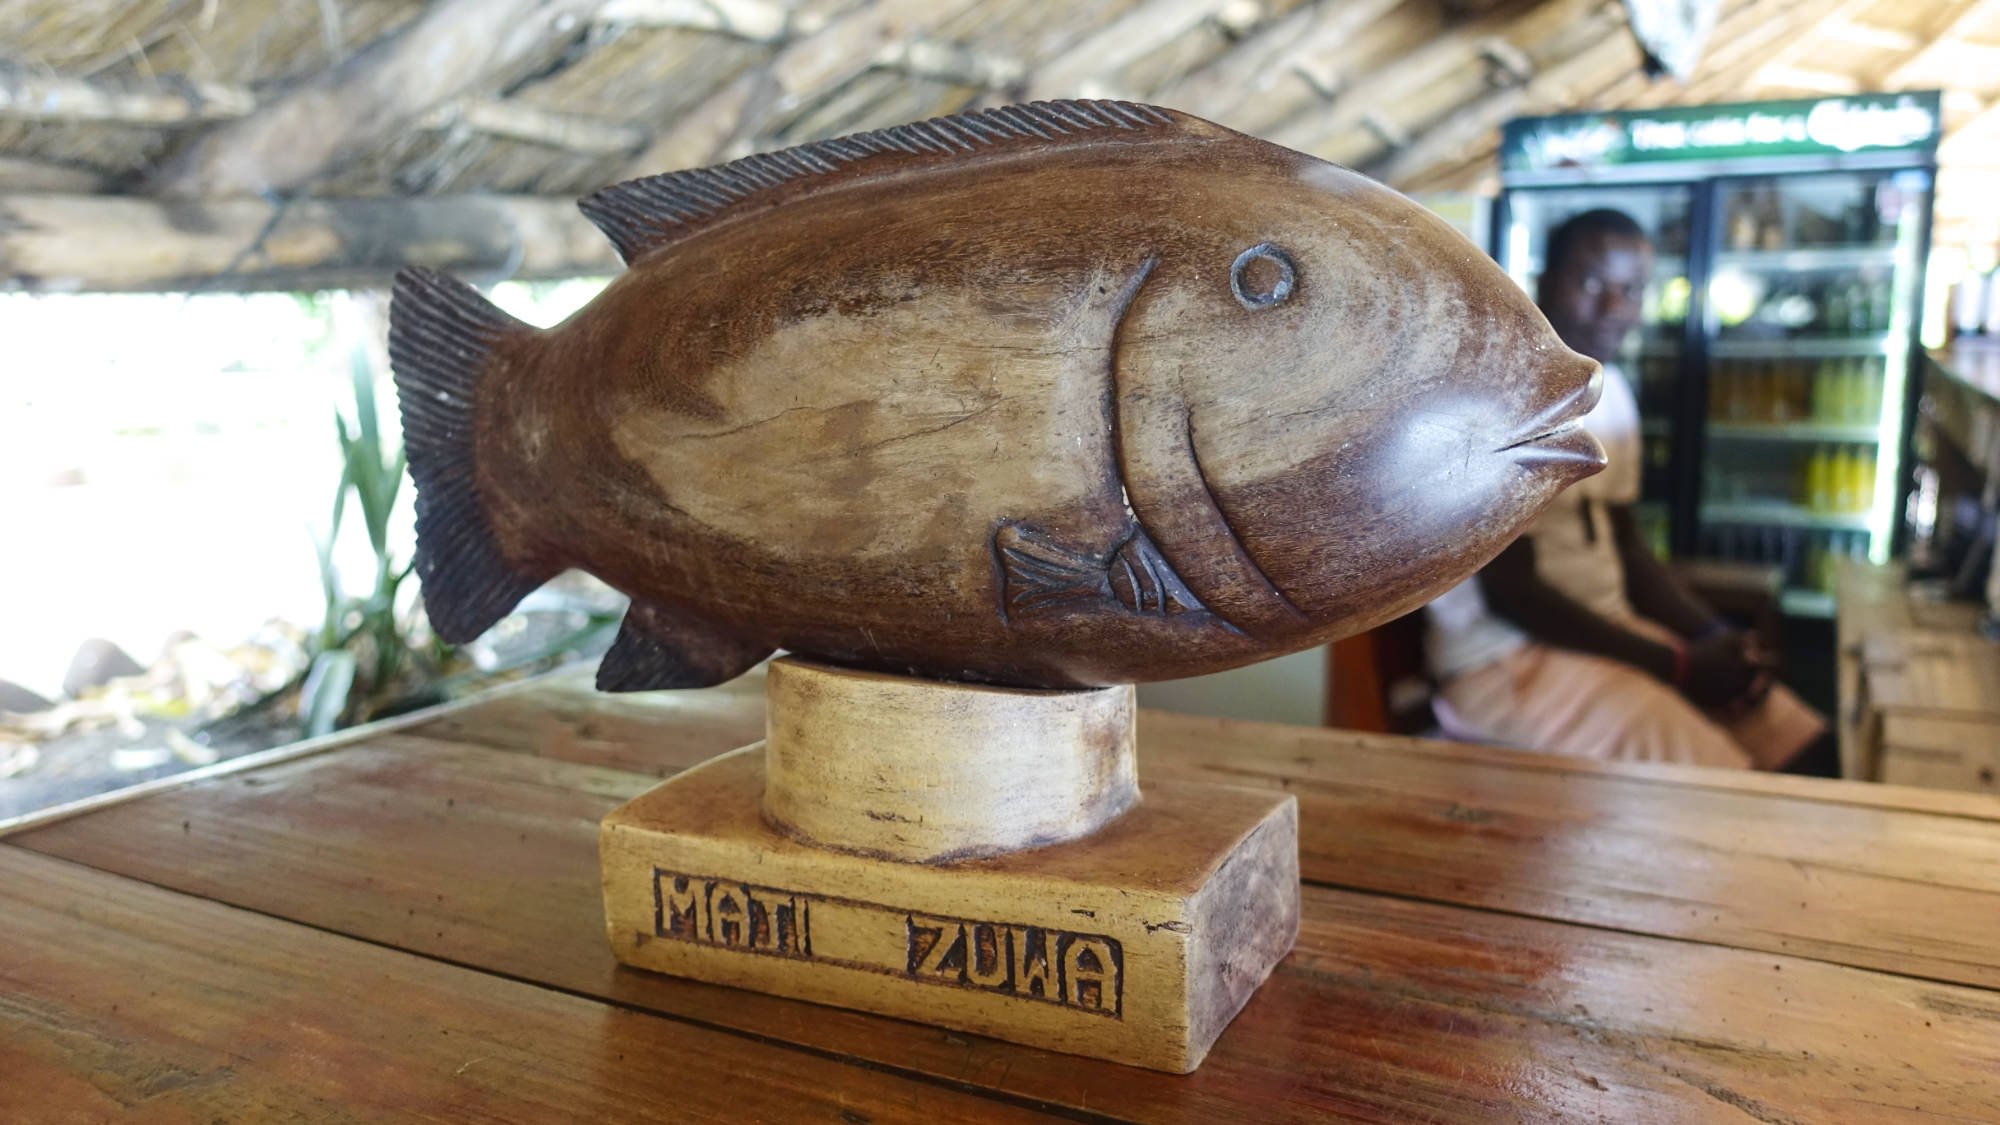 Maji Zuwa Malawi Africa Wood Carving.jpg